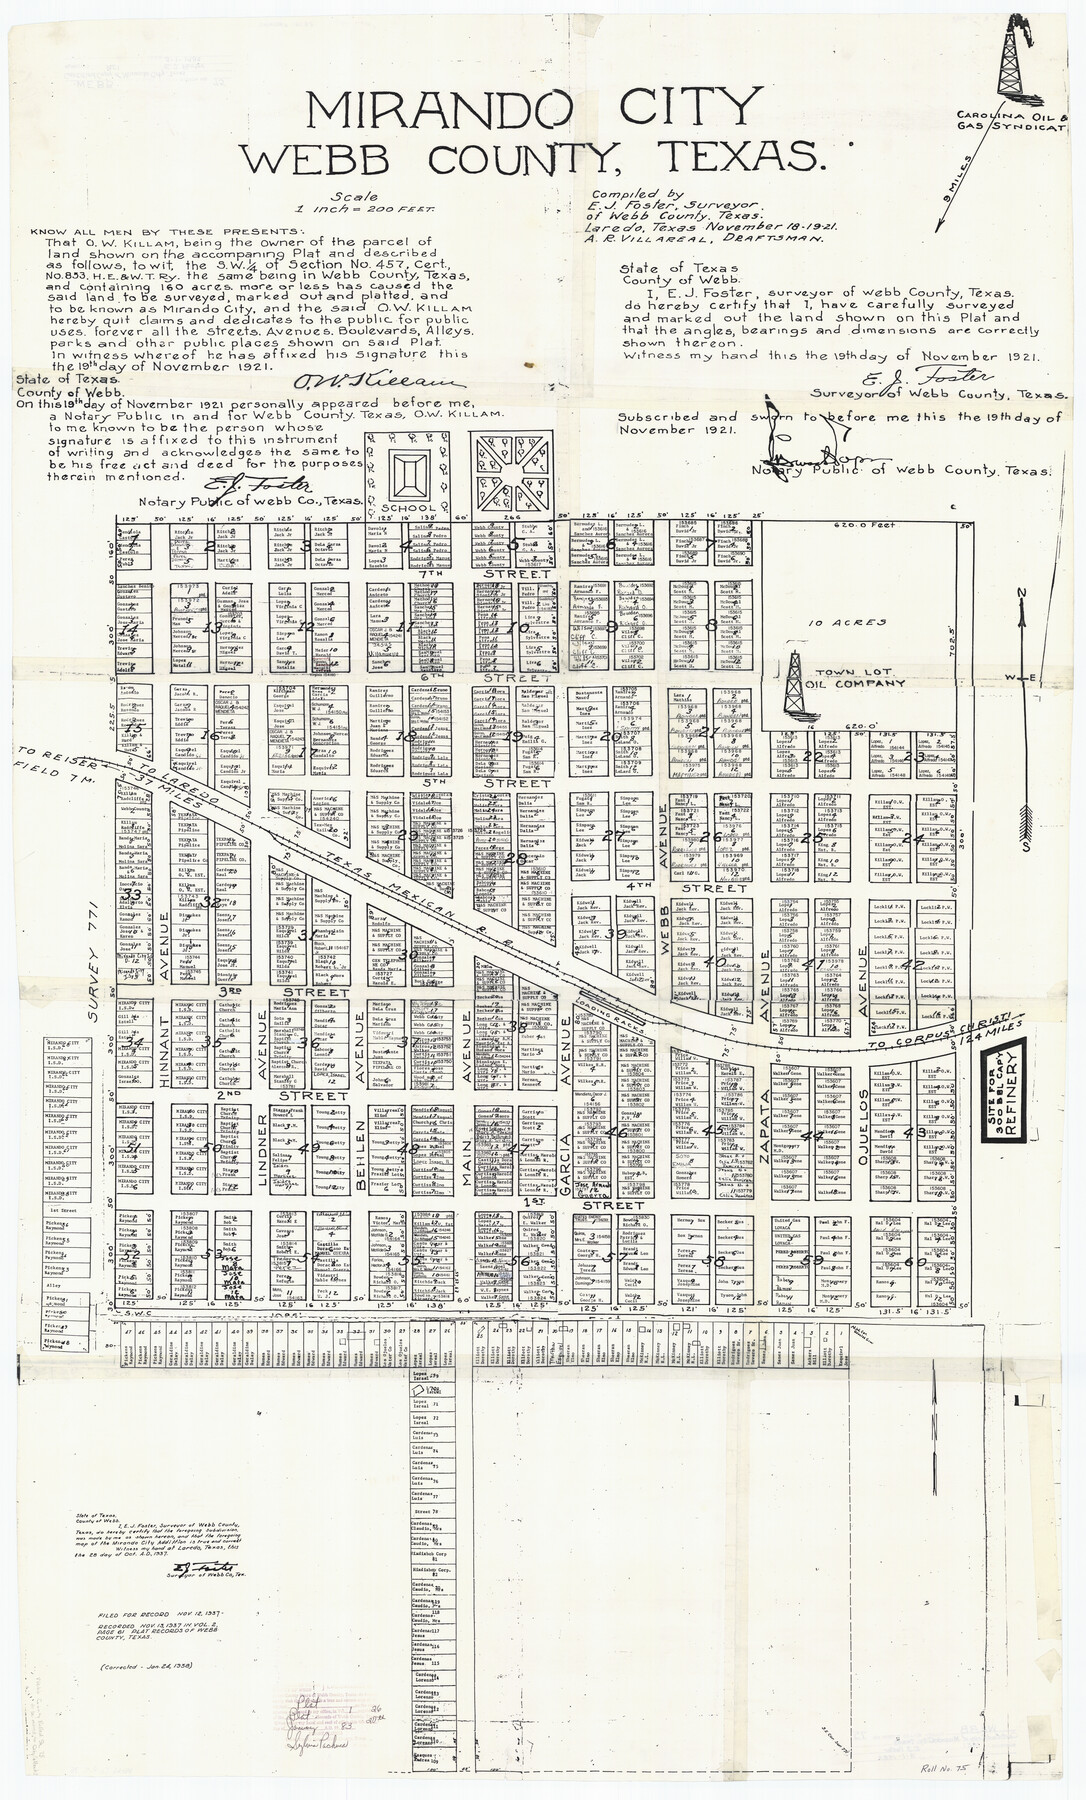 10132, Mirando City, Webb County, Texas, General Map Collection